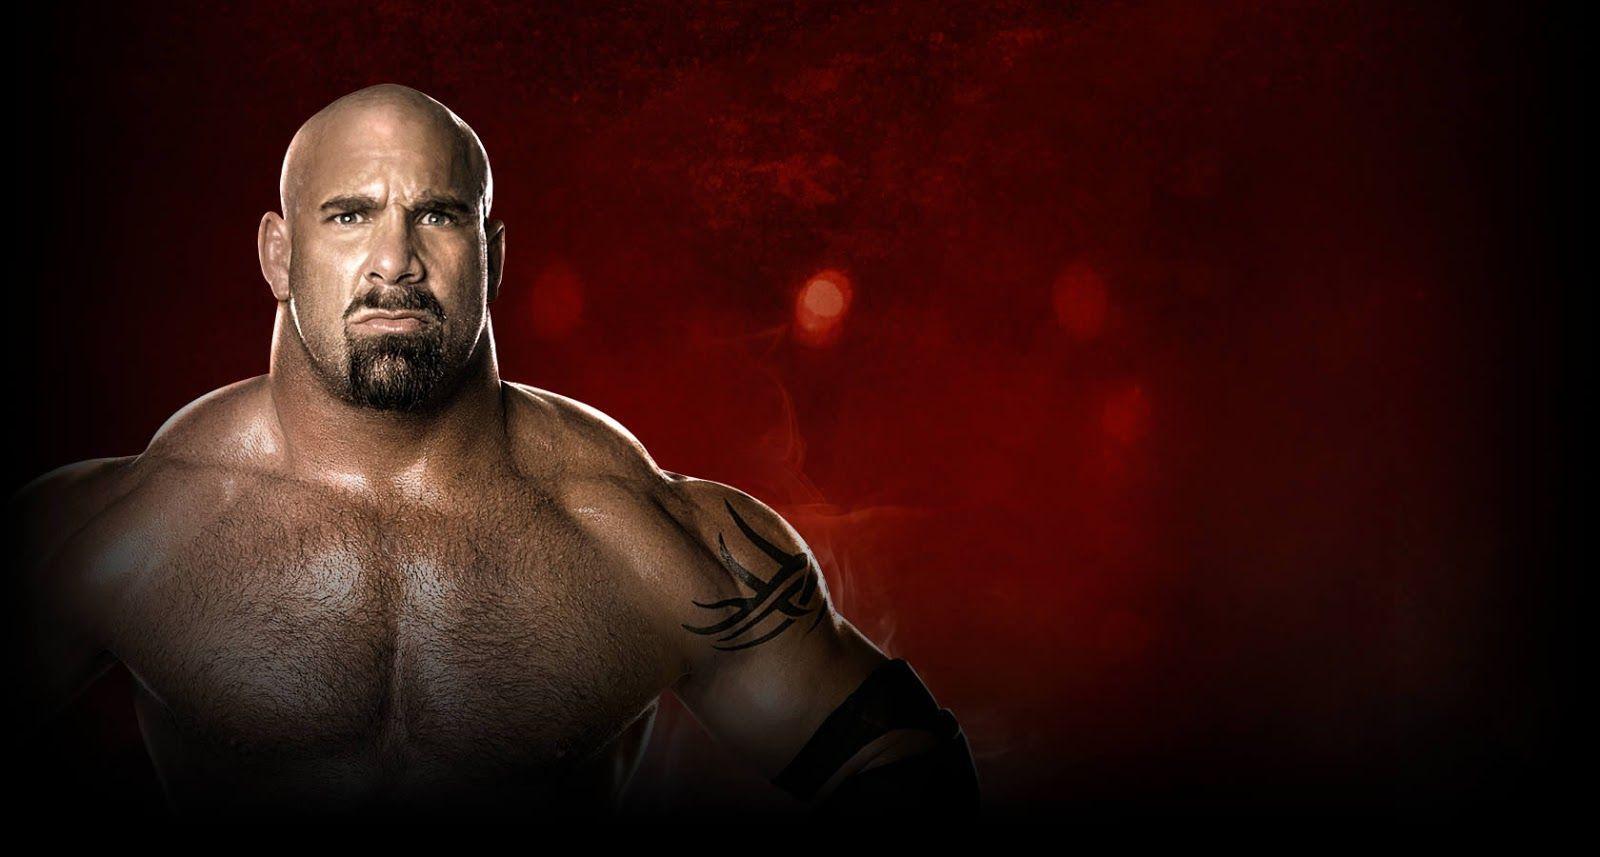 WWE Goldberg Wallpaper HD image. Live HD Wallpaper HQ Picture